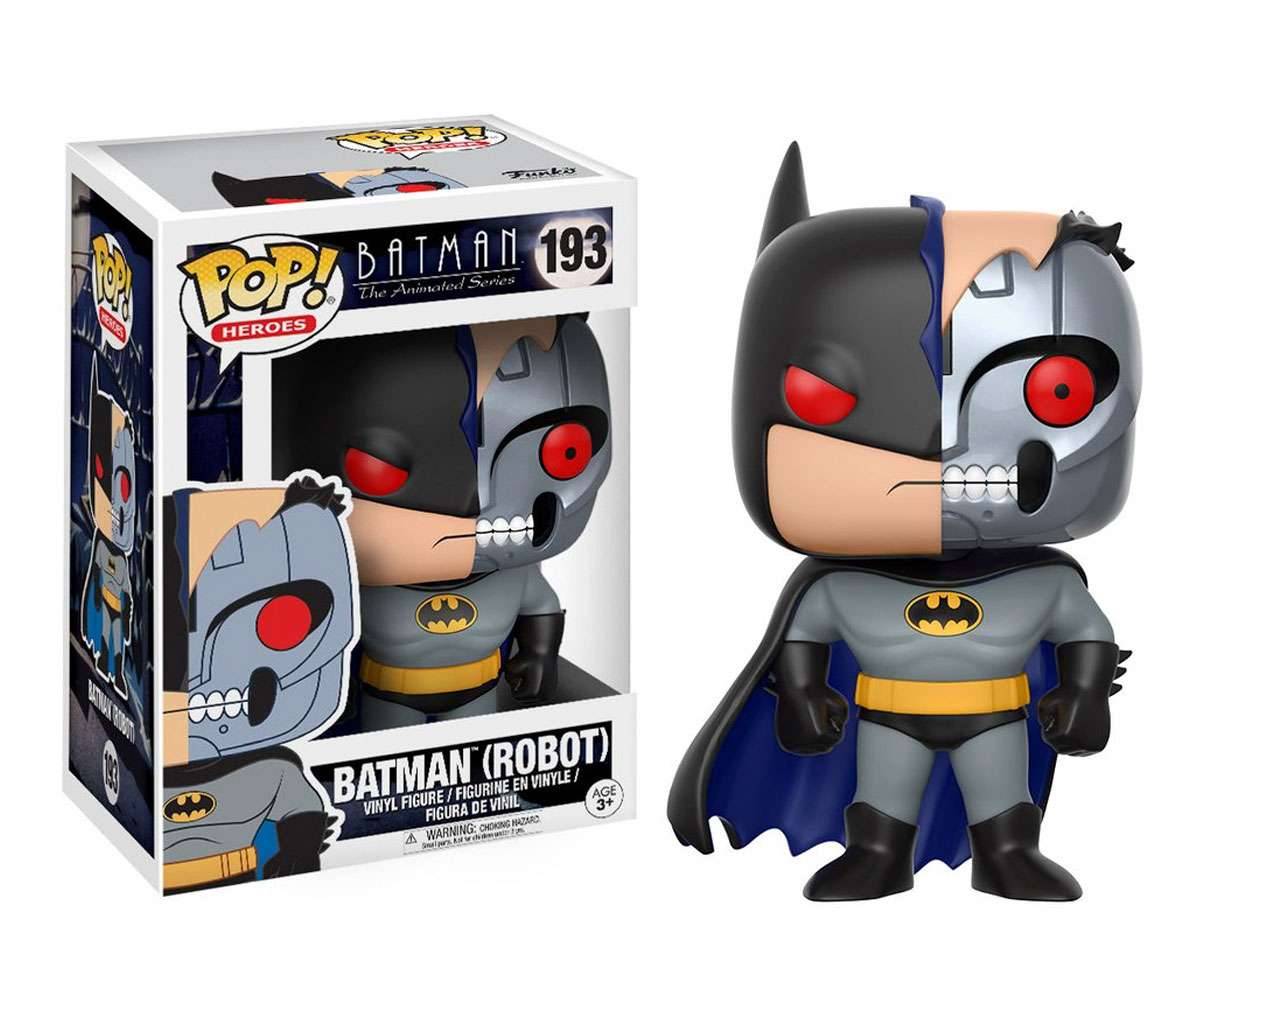 Batman Robot The Animated Series Pop! Vinyl